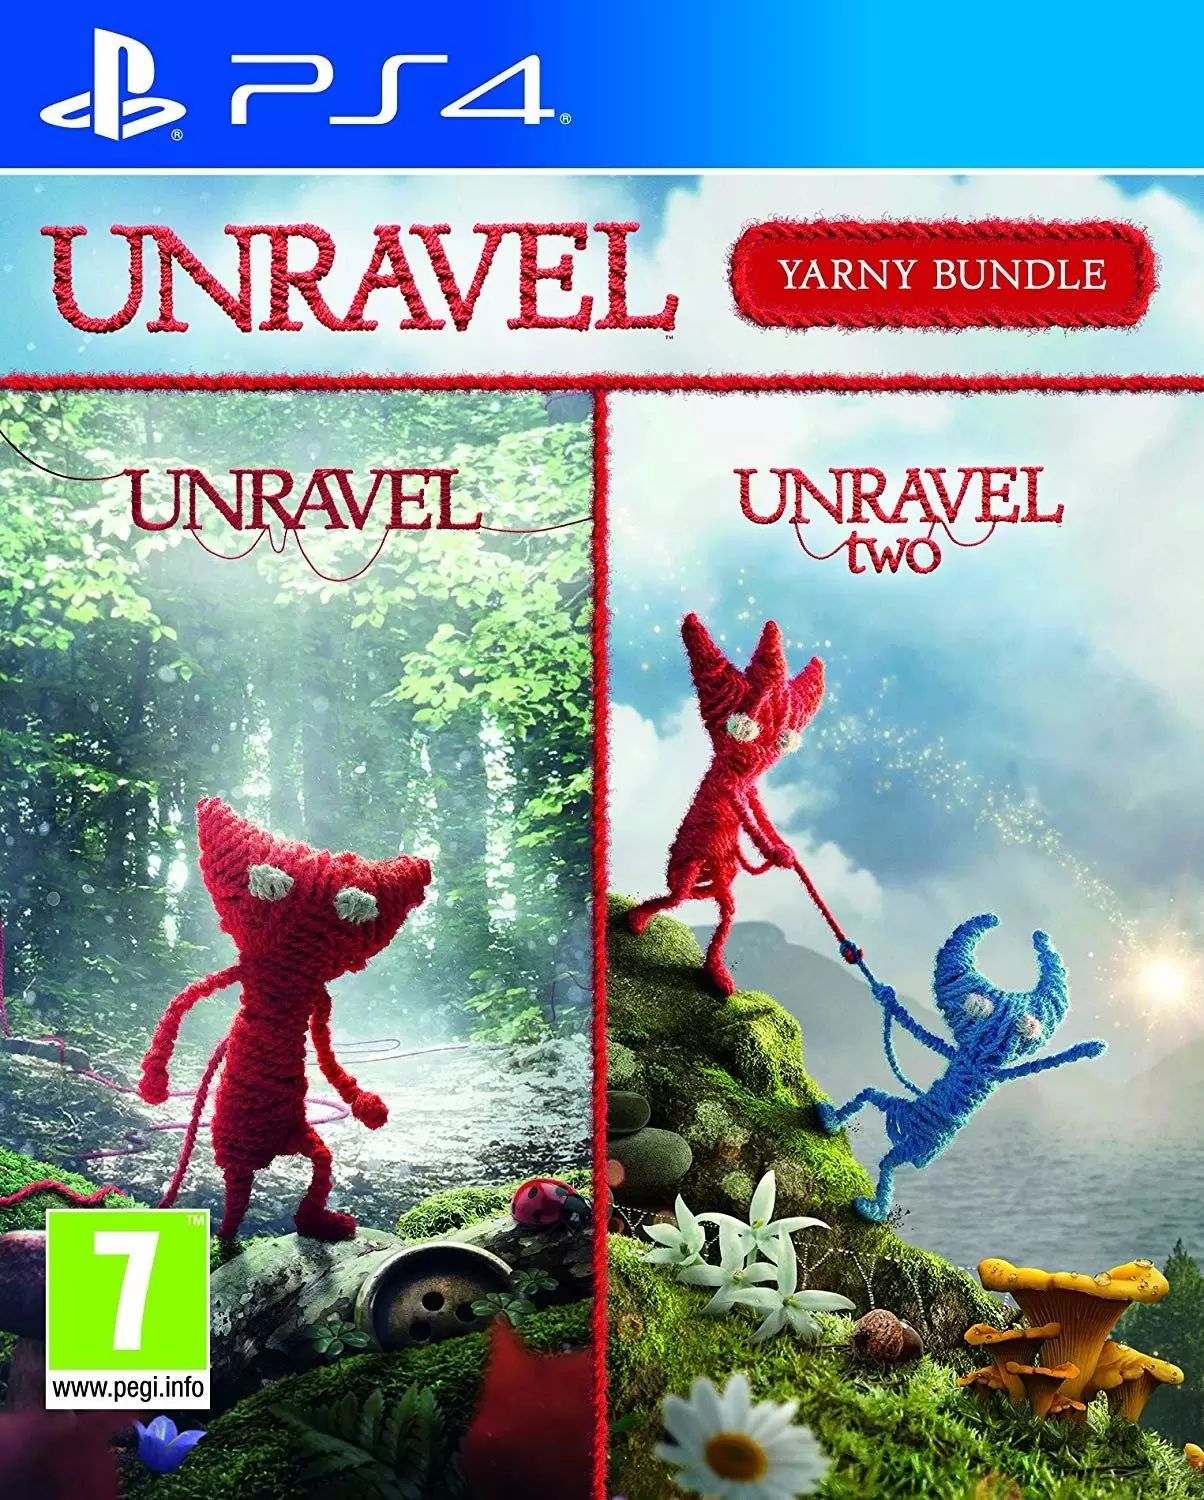 PS4 Games - Unravel Yarny Bundle